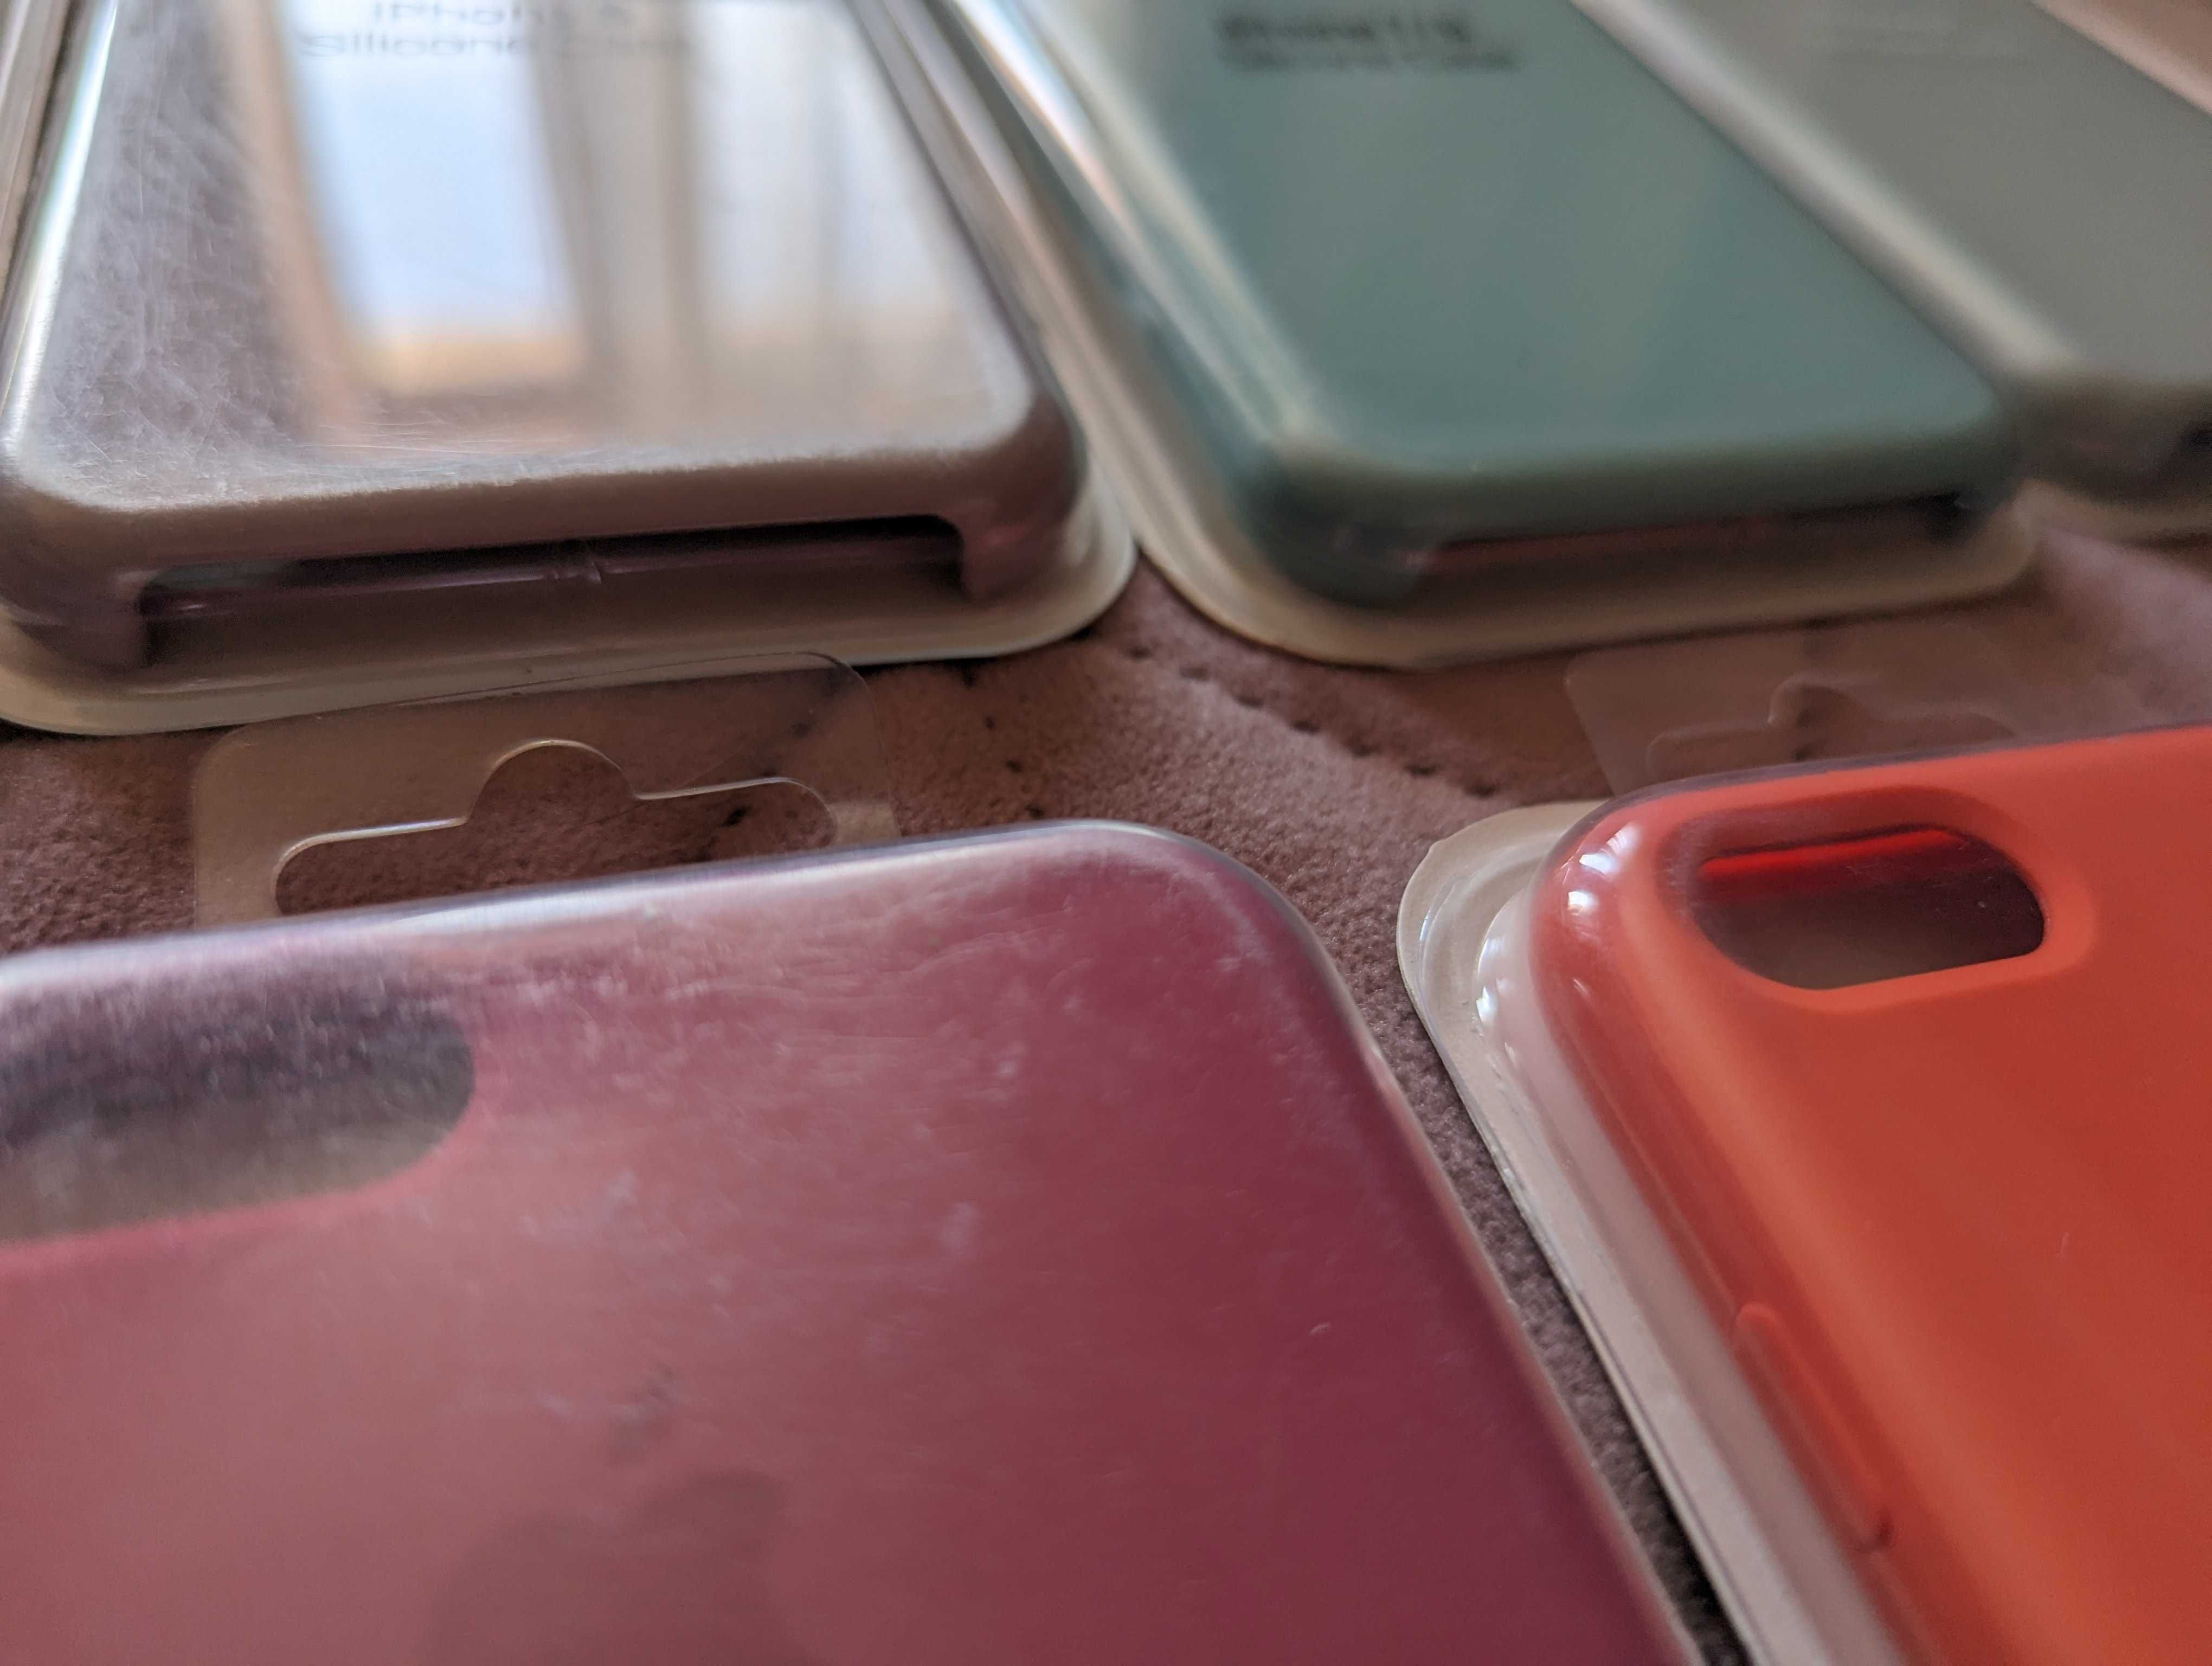 Чехол Apple Silicone Case для iPhone 7 8